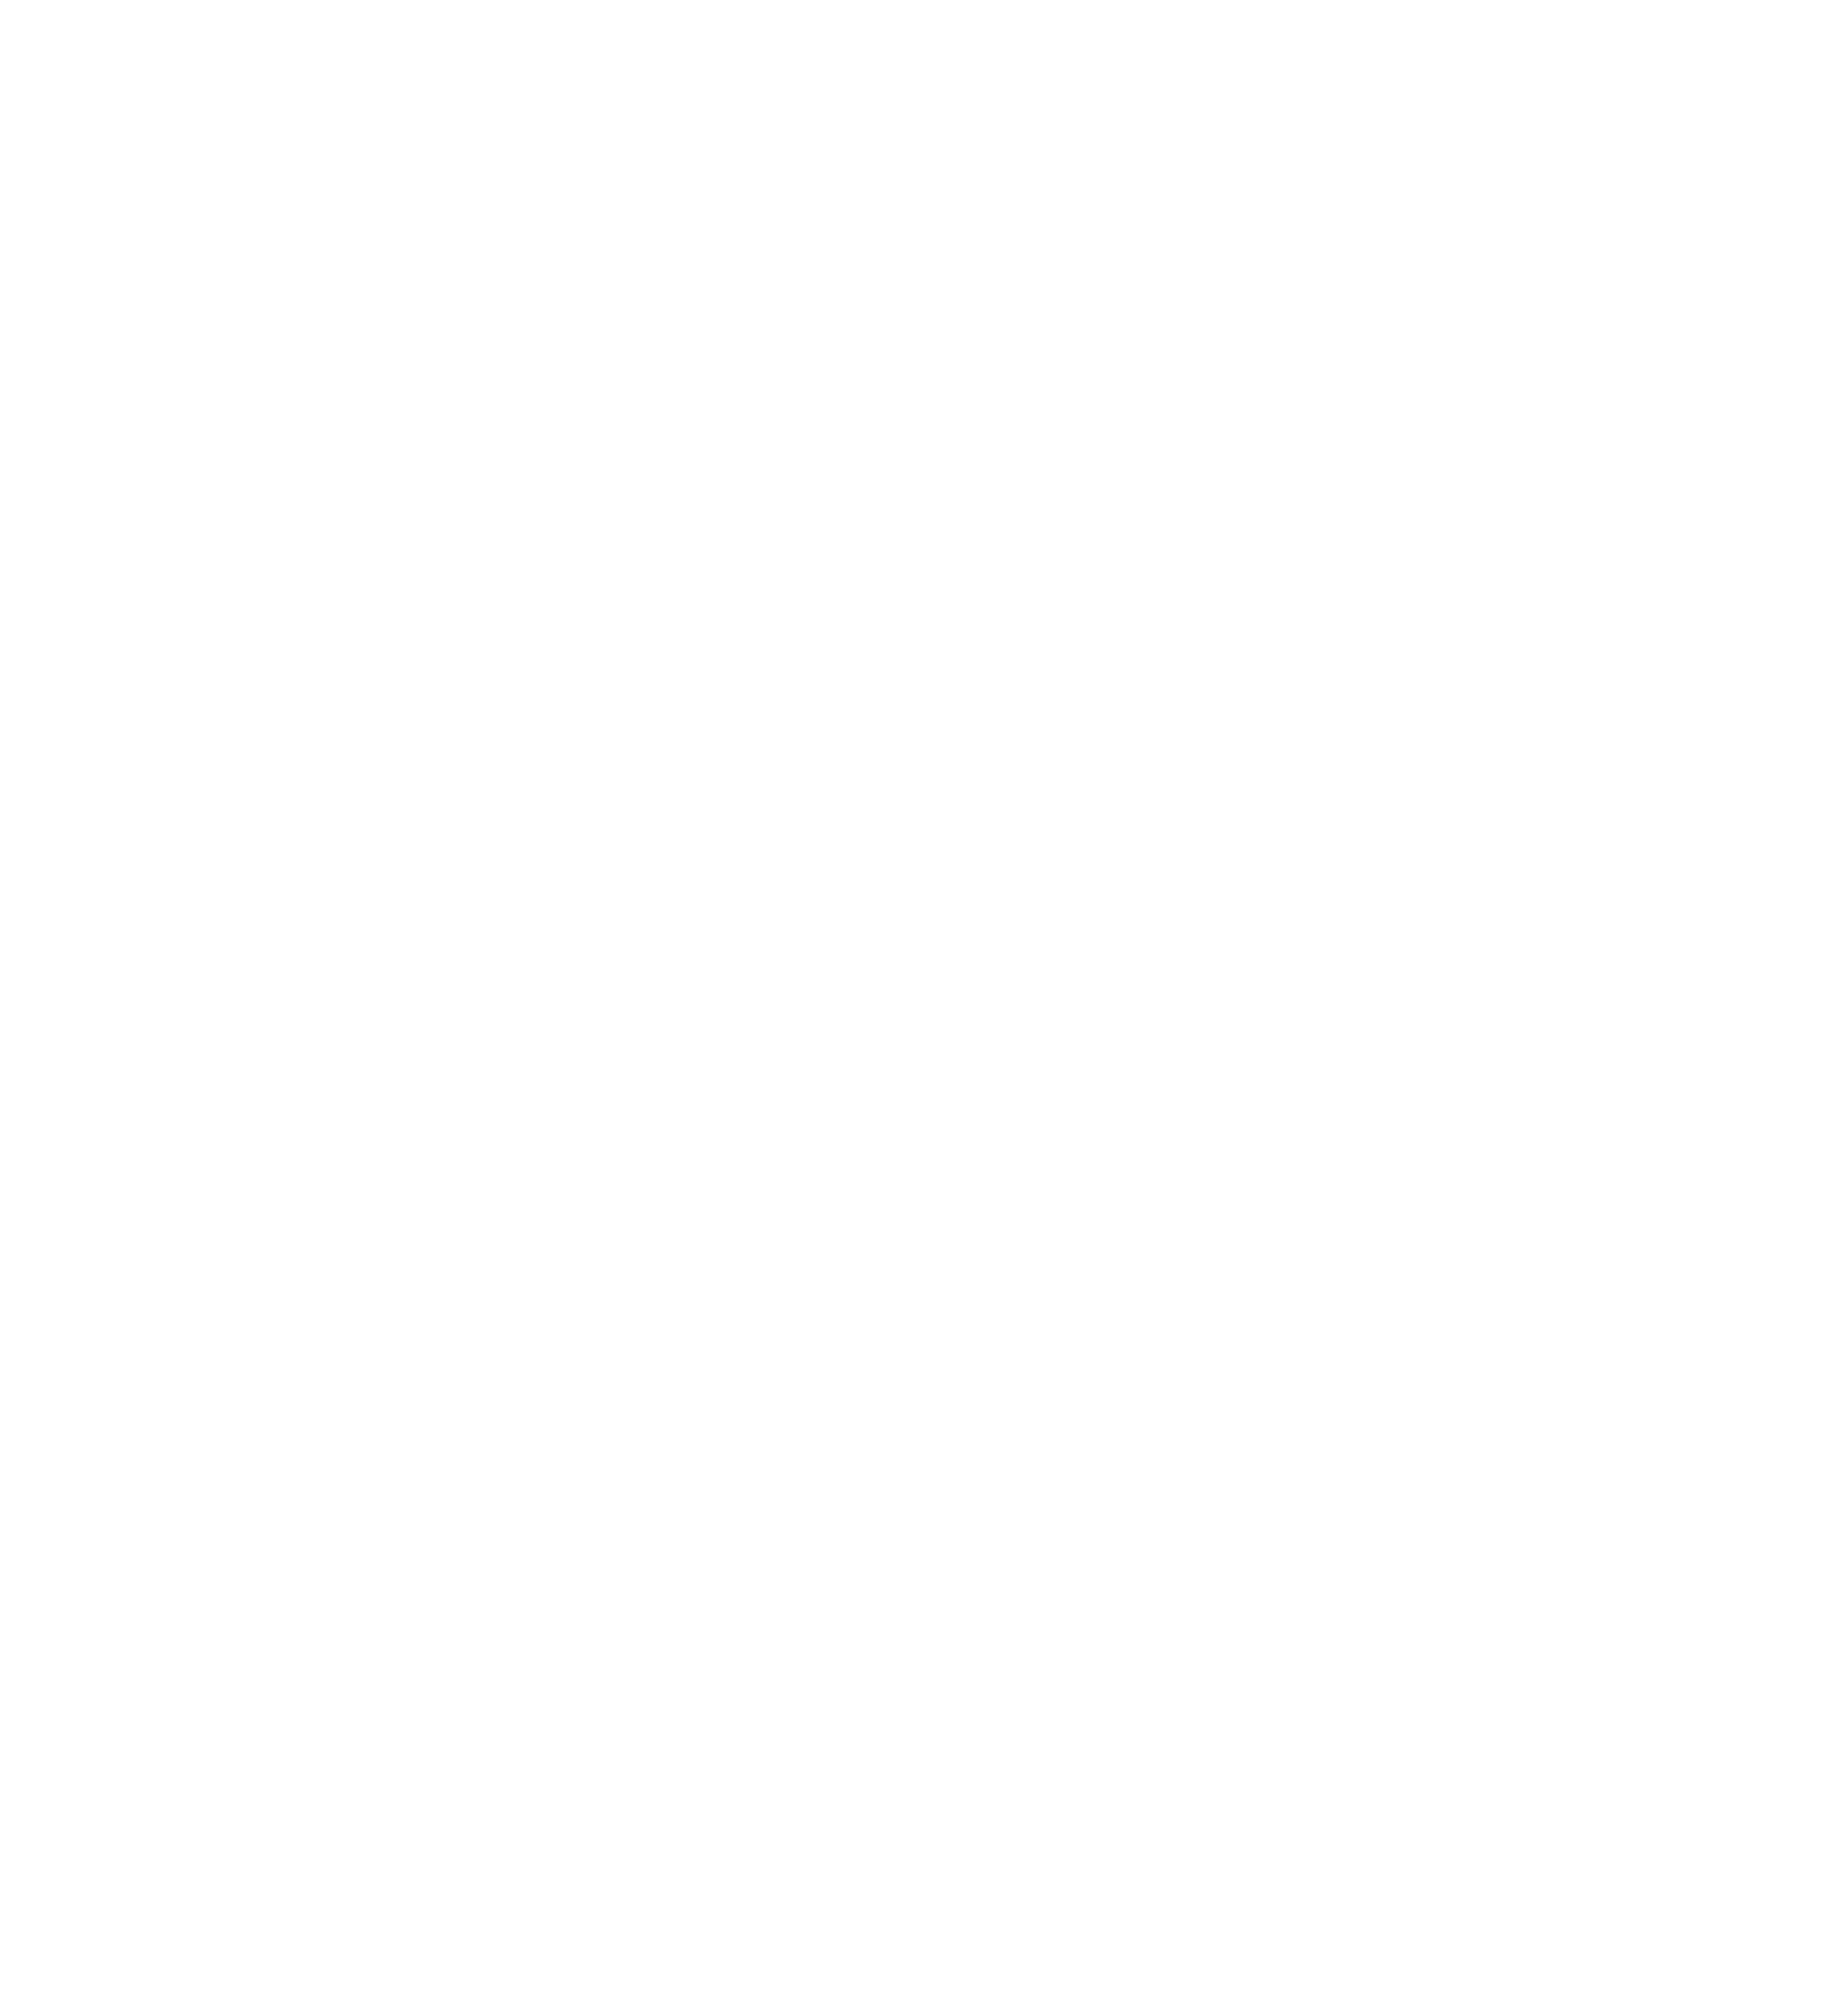 Wilderness Ridge Chiropractic